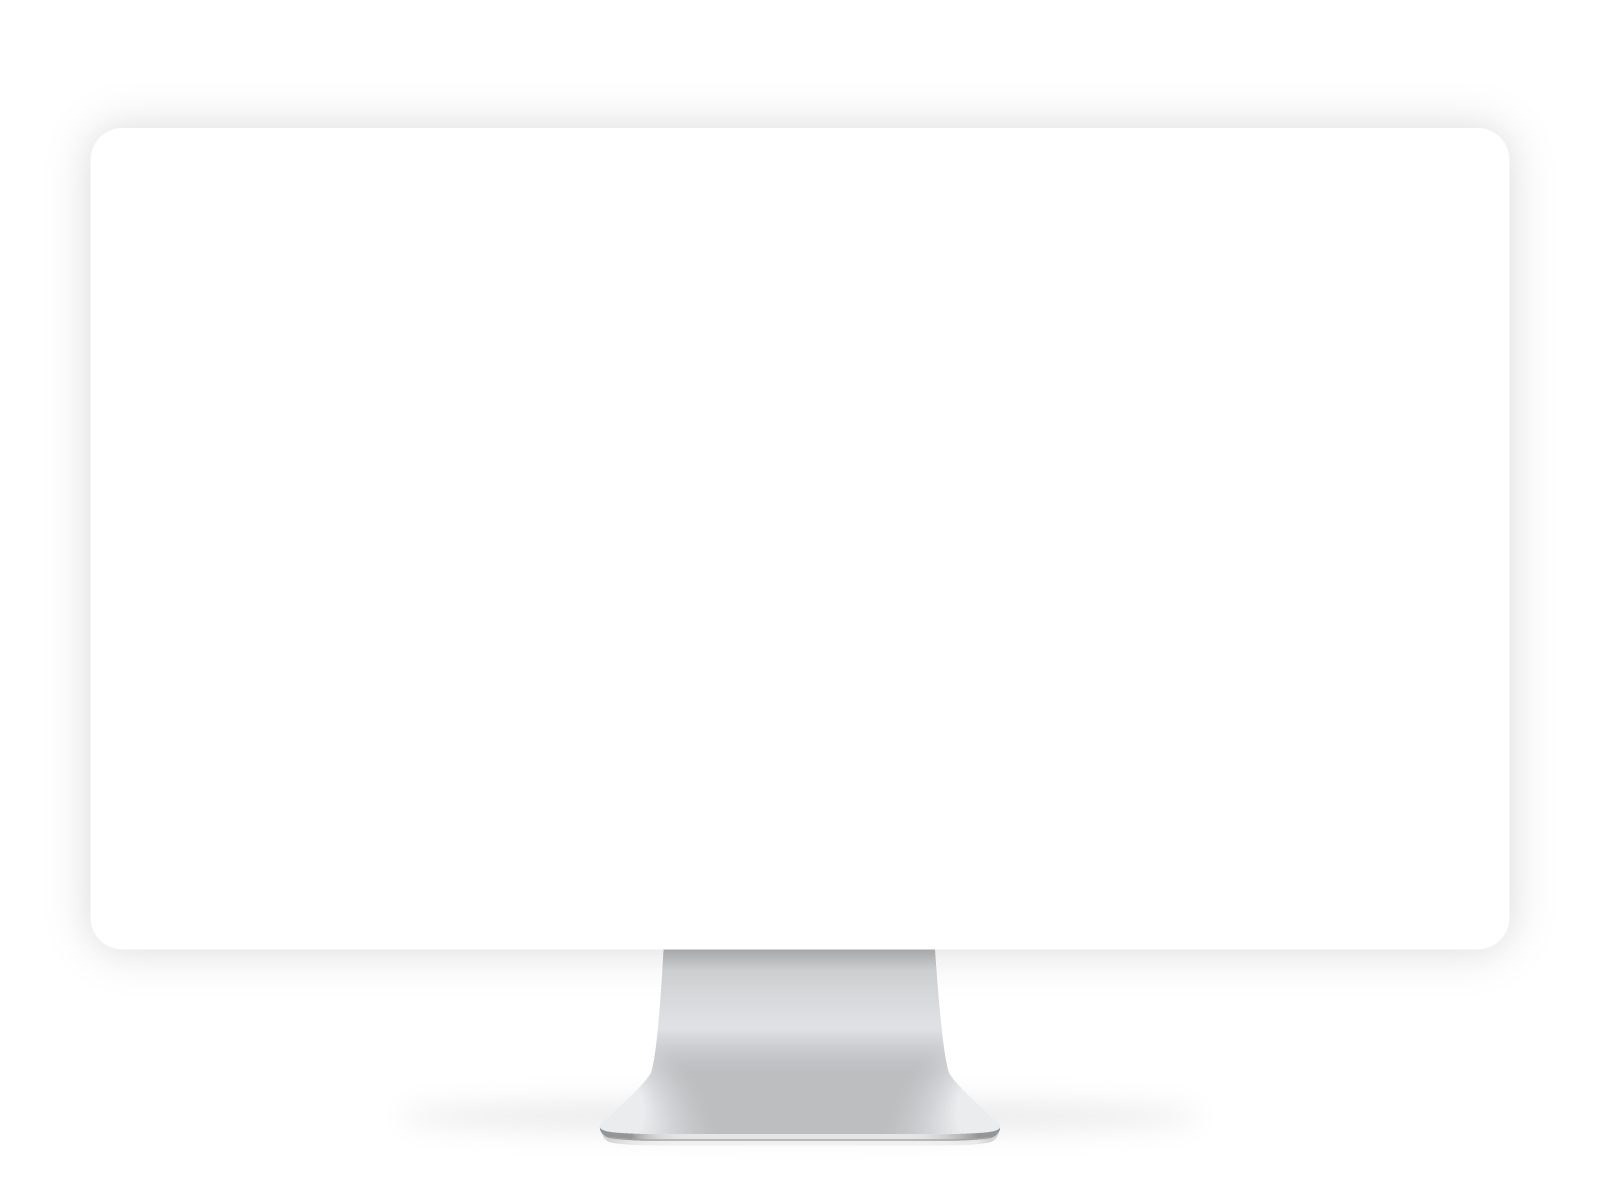 desktop monitor